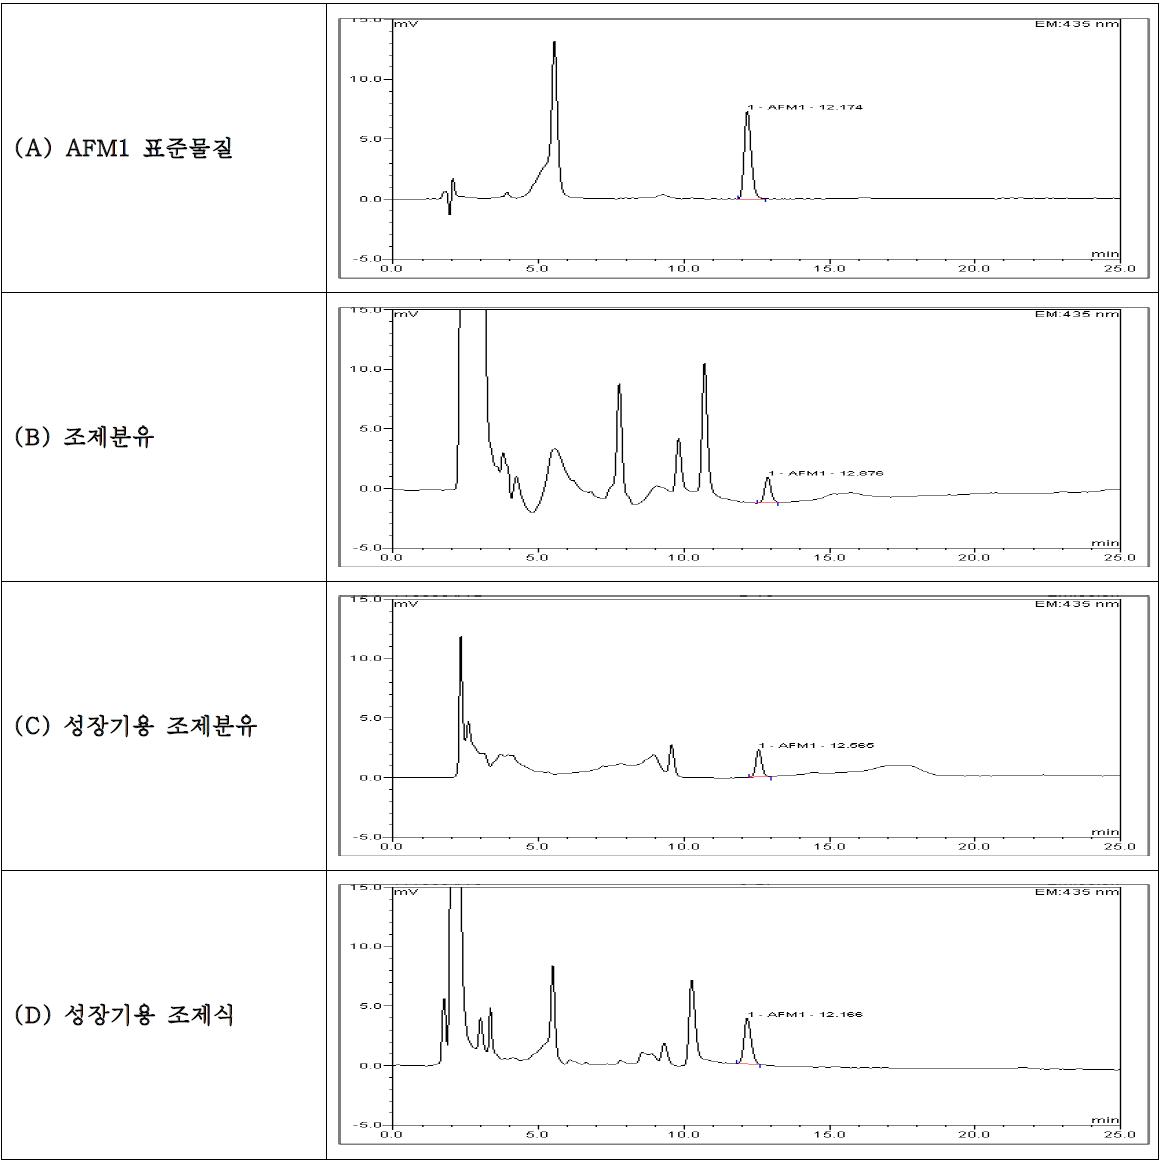 Chromatogram of standard and positive sample for aflatoxin M1.